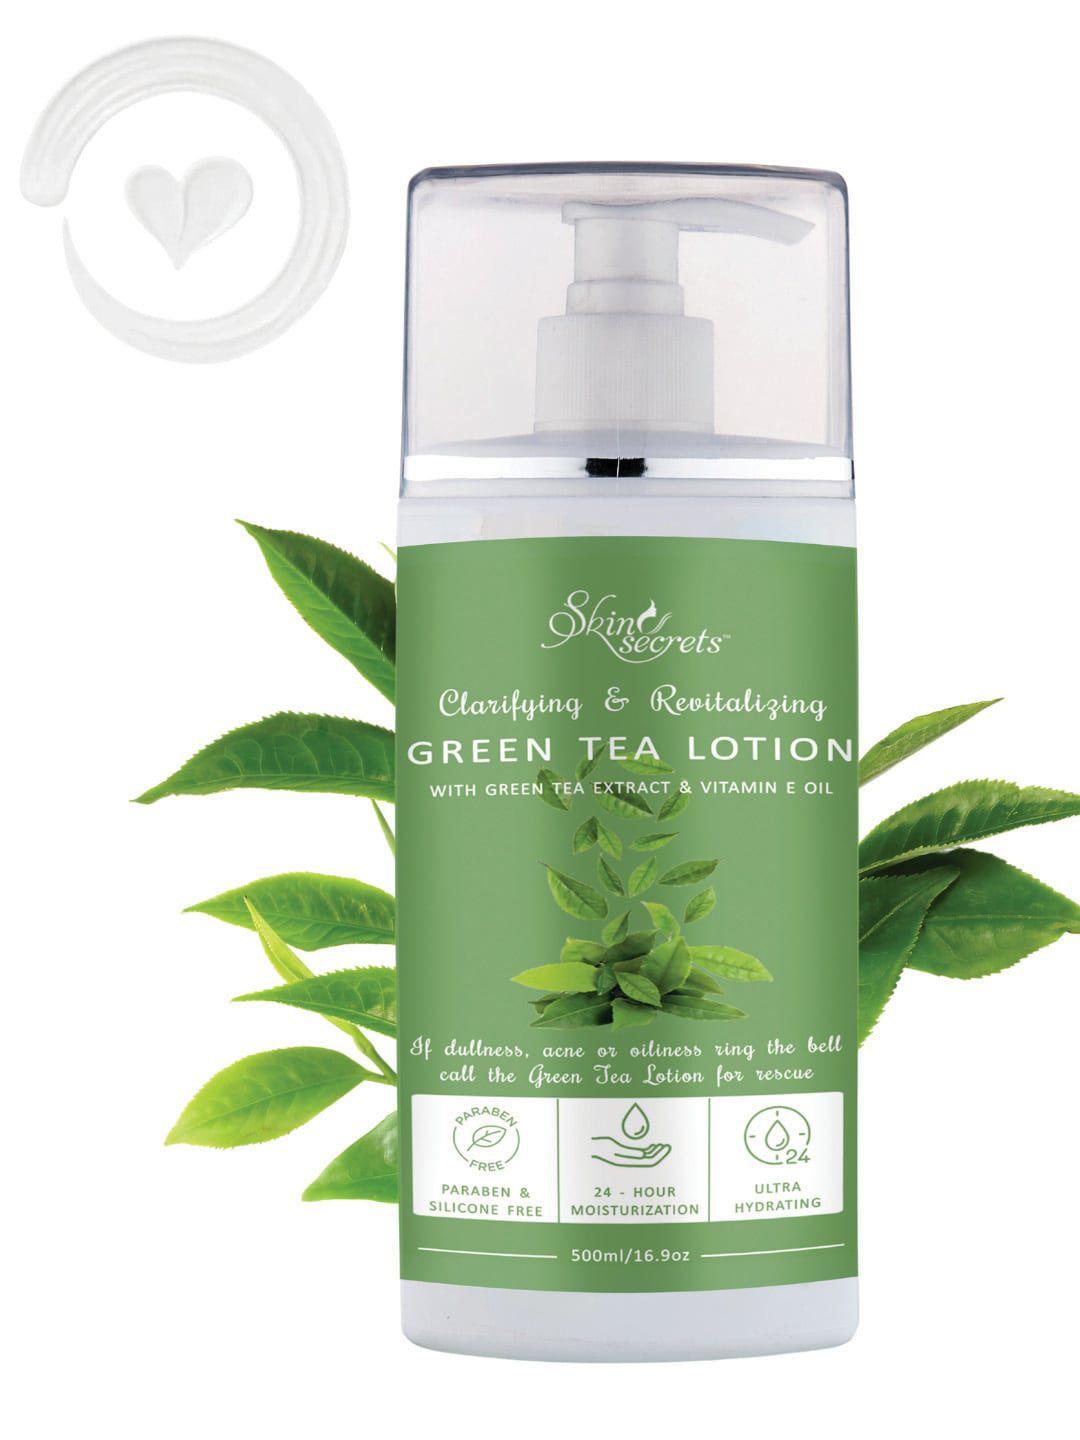 skin secrets clarifying & revitalizing green tea body lotion with vitamin e oil - 500 ml